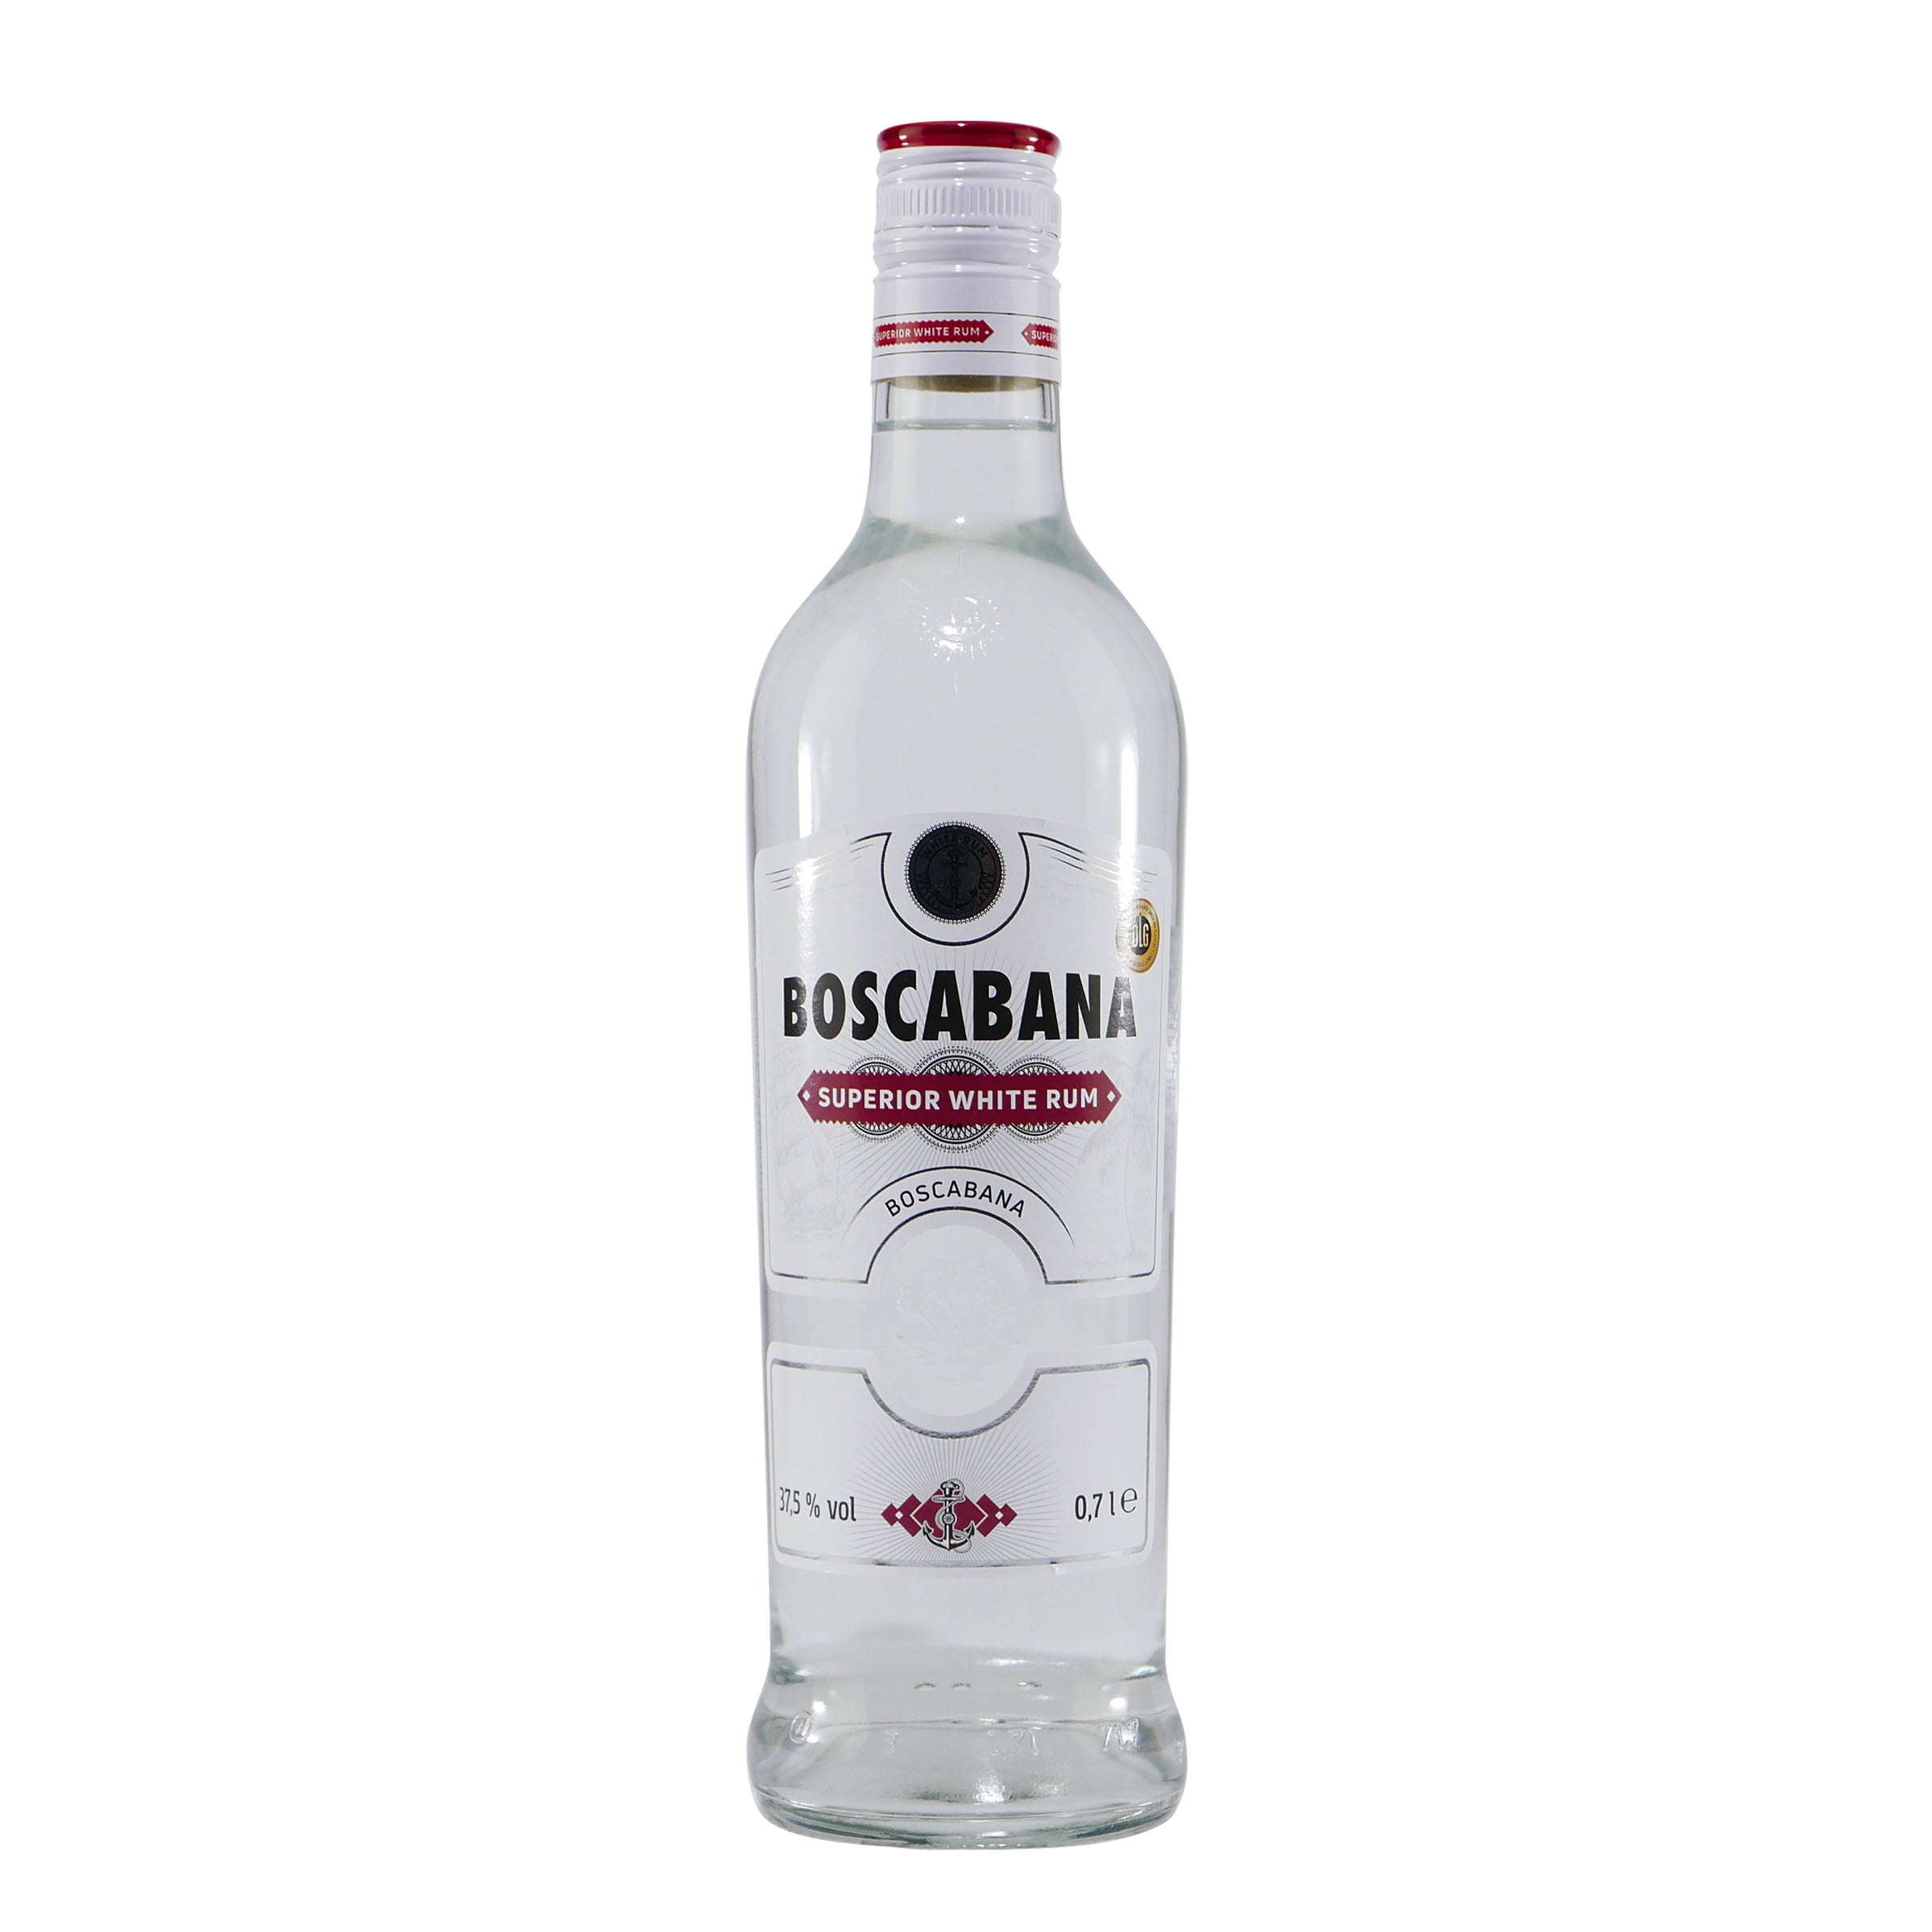 Boscabana White Rum (6 x 0,7L)